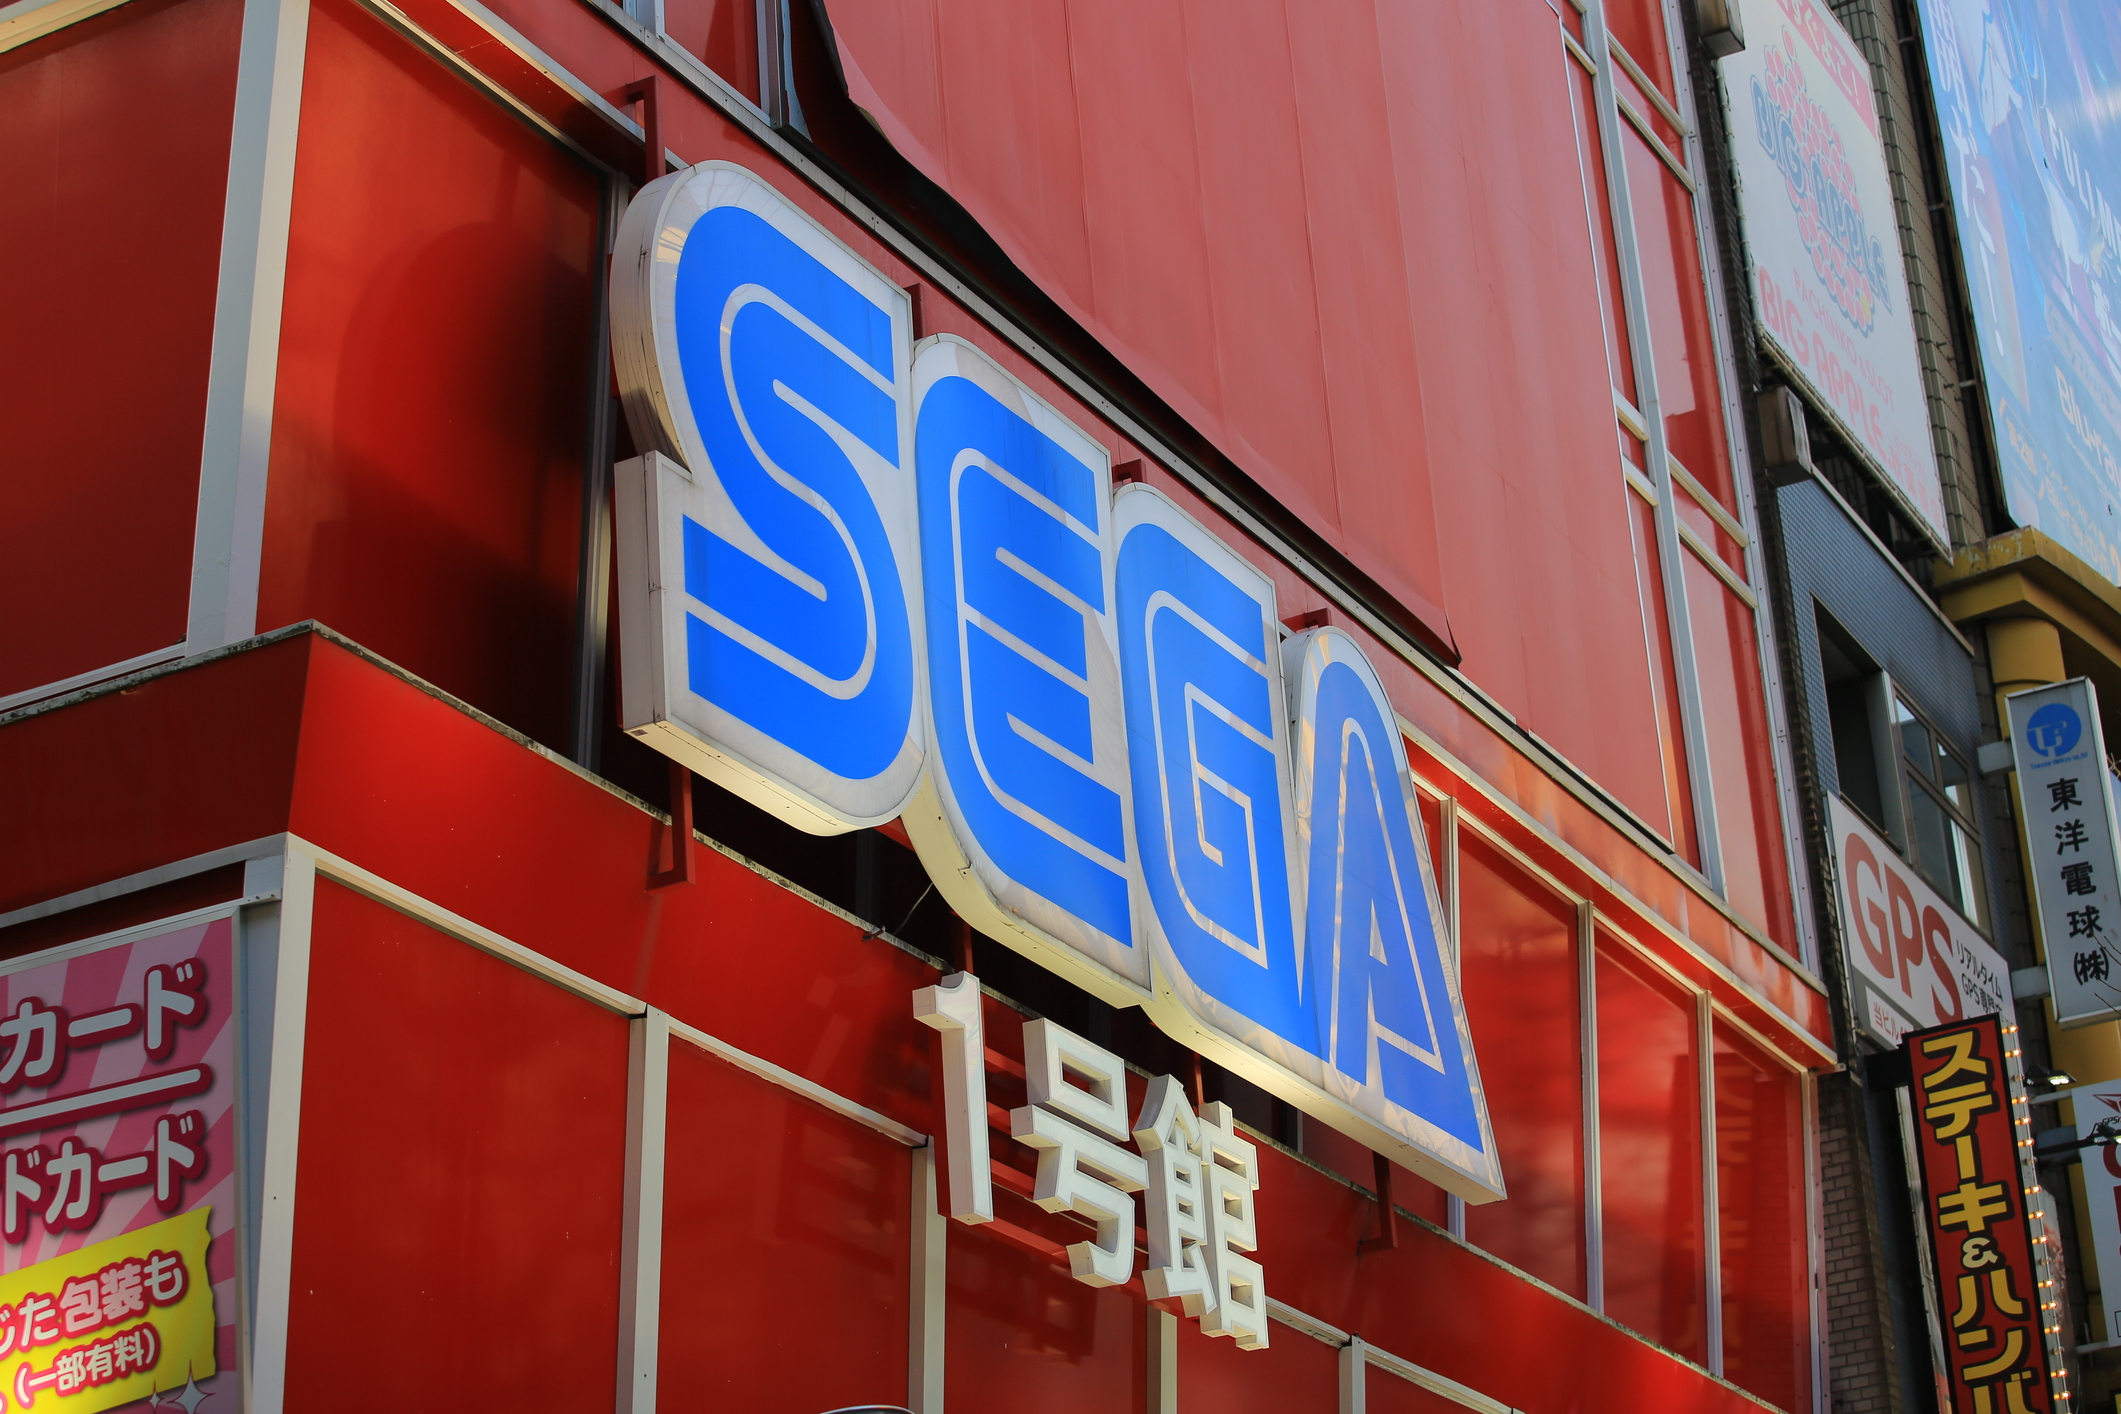 Sega storefront - Crypto News October